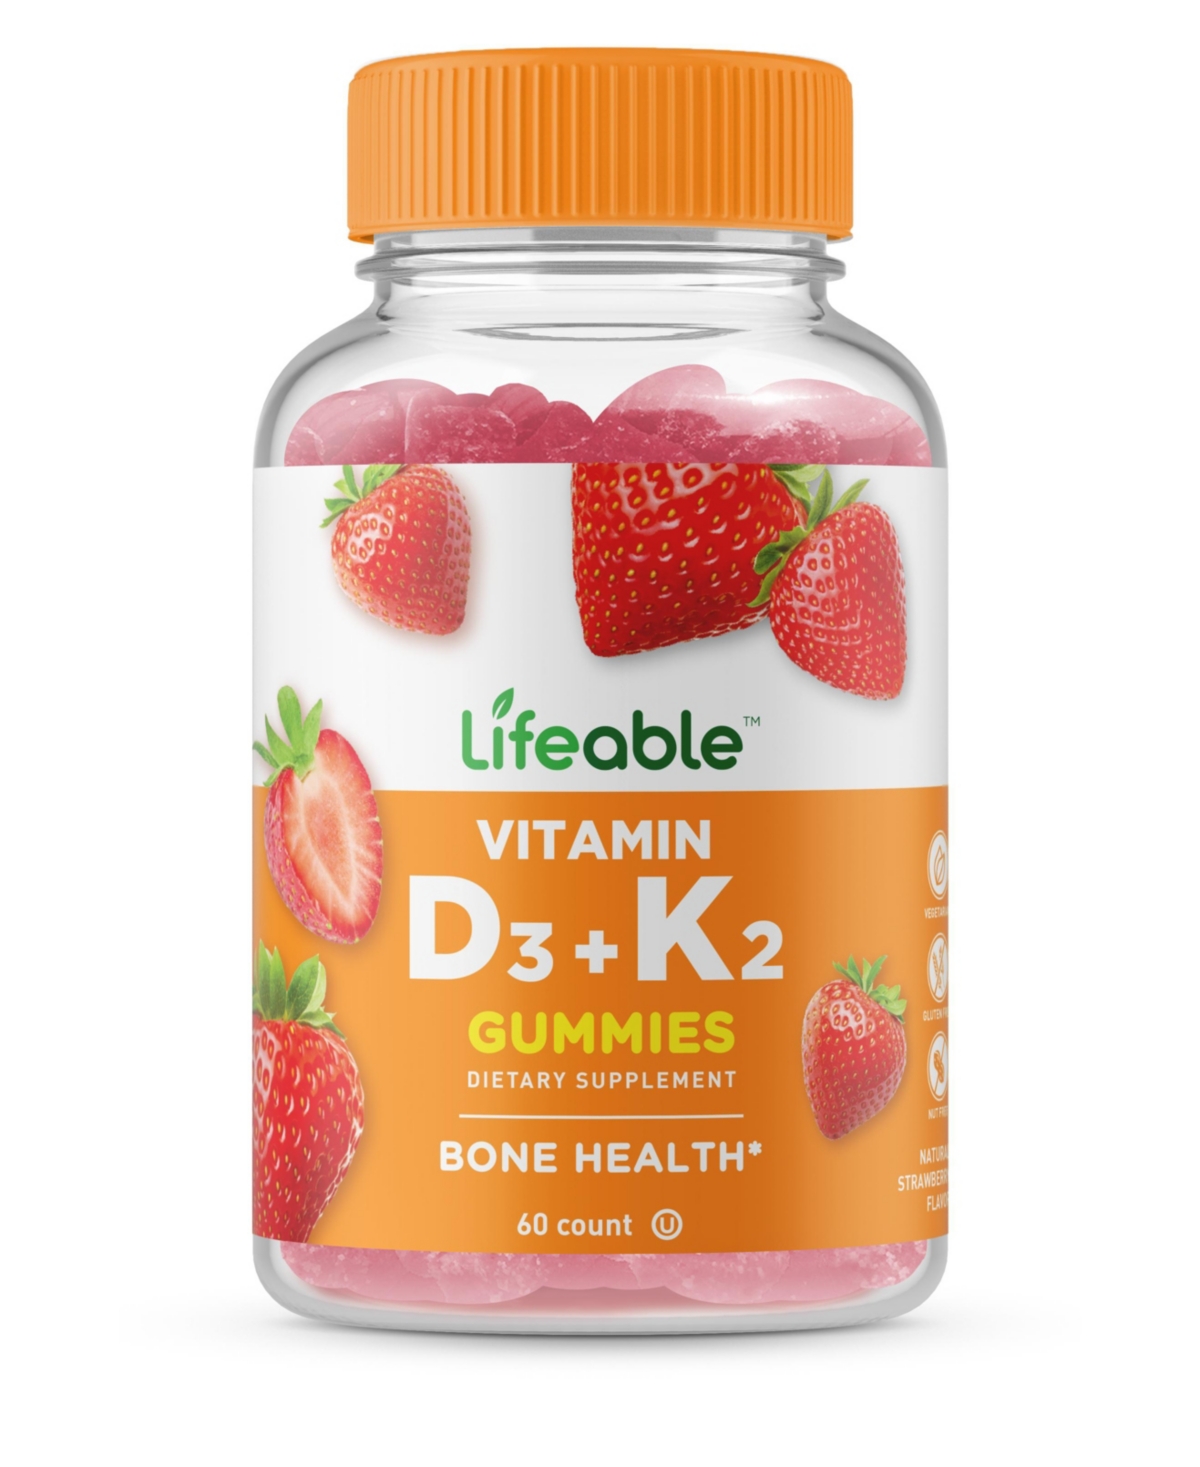 Vitamin D3 + K2 Gummies - Bone Health And Immunity - Great Tasting Natural Flavor, Dietary Supplement Vitamins - 60 Gummies - Open Miscellane